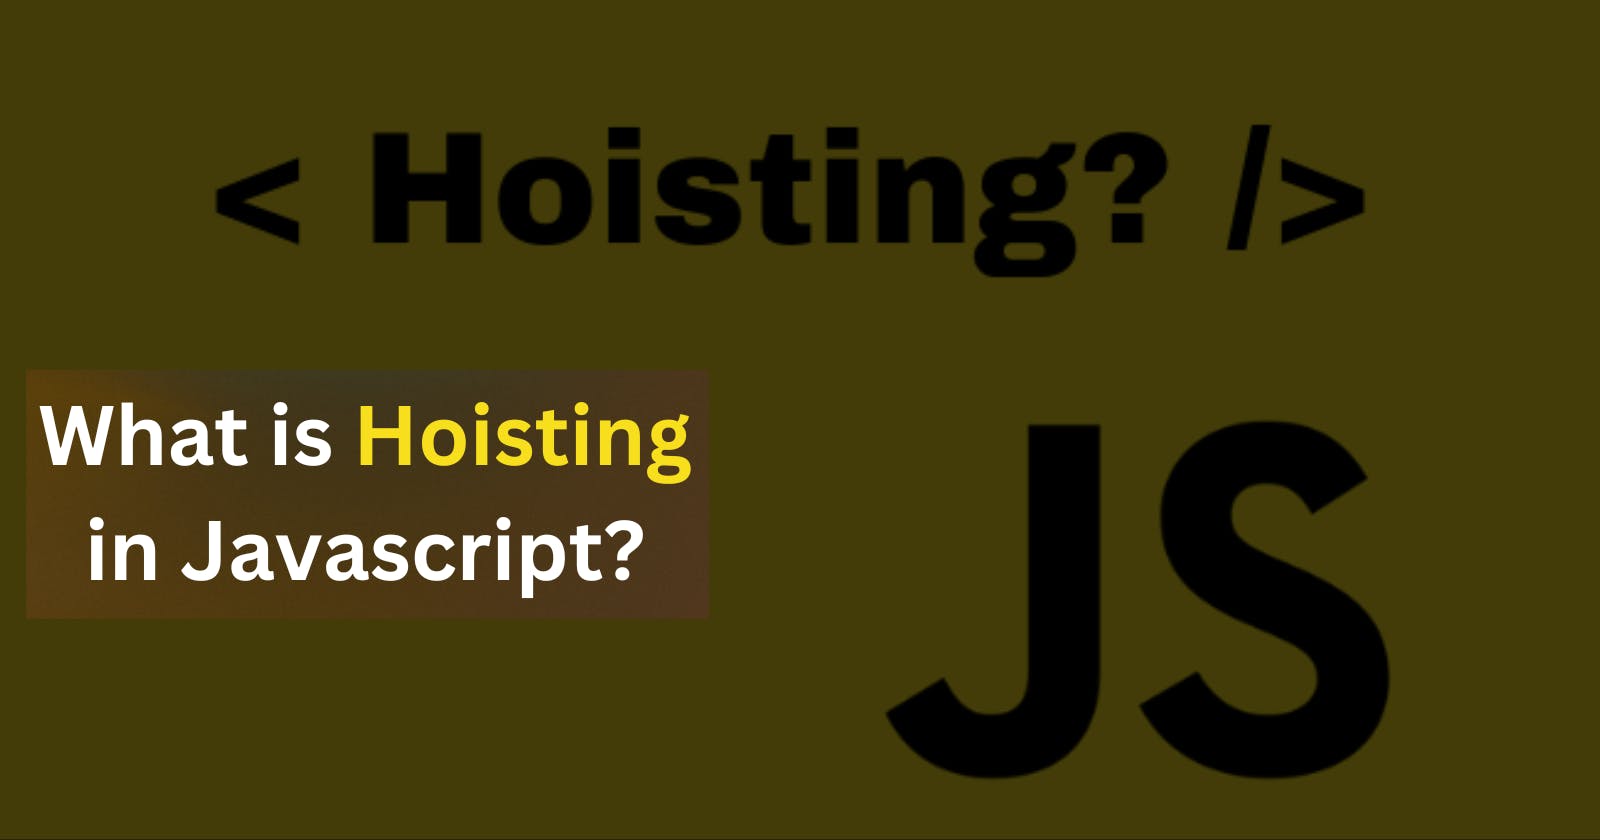 Hoisting in JavaScript - An in-depth guide on how hosting works in JavaScript.